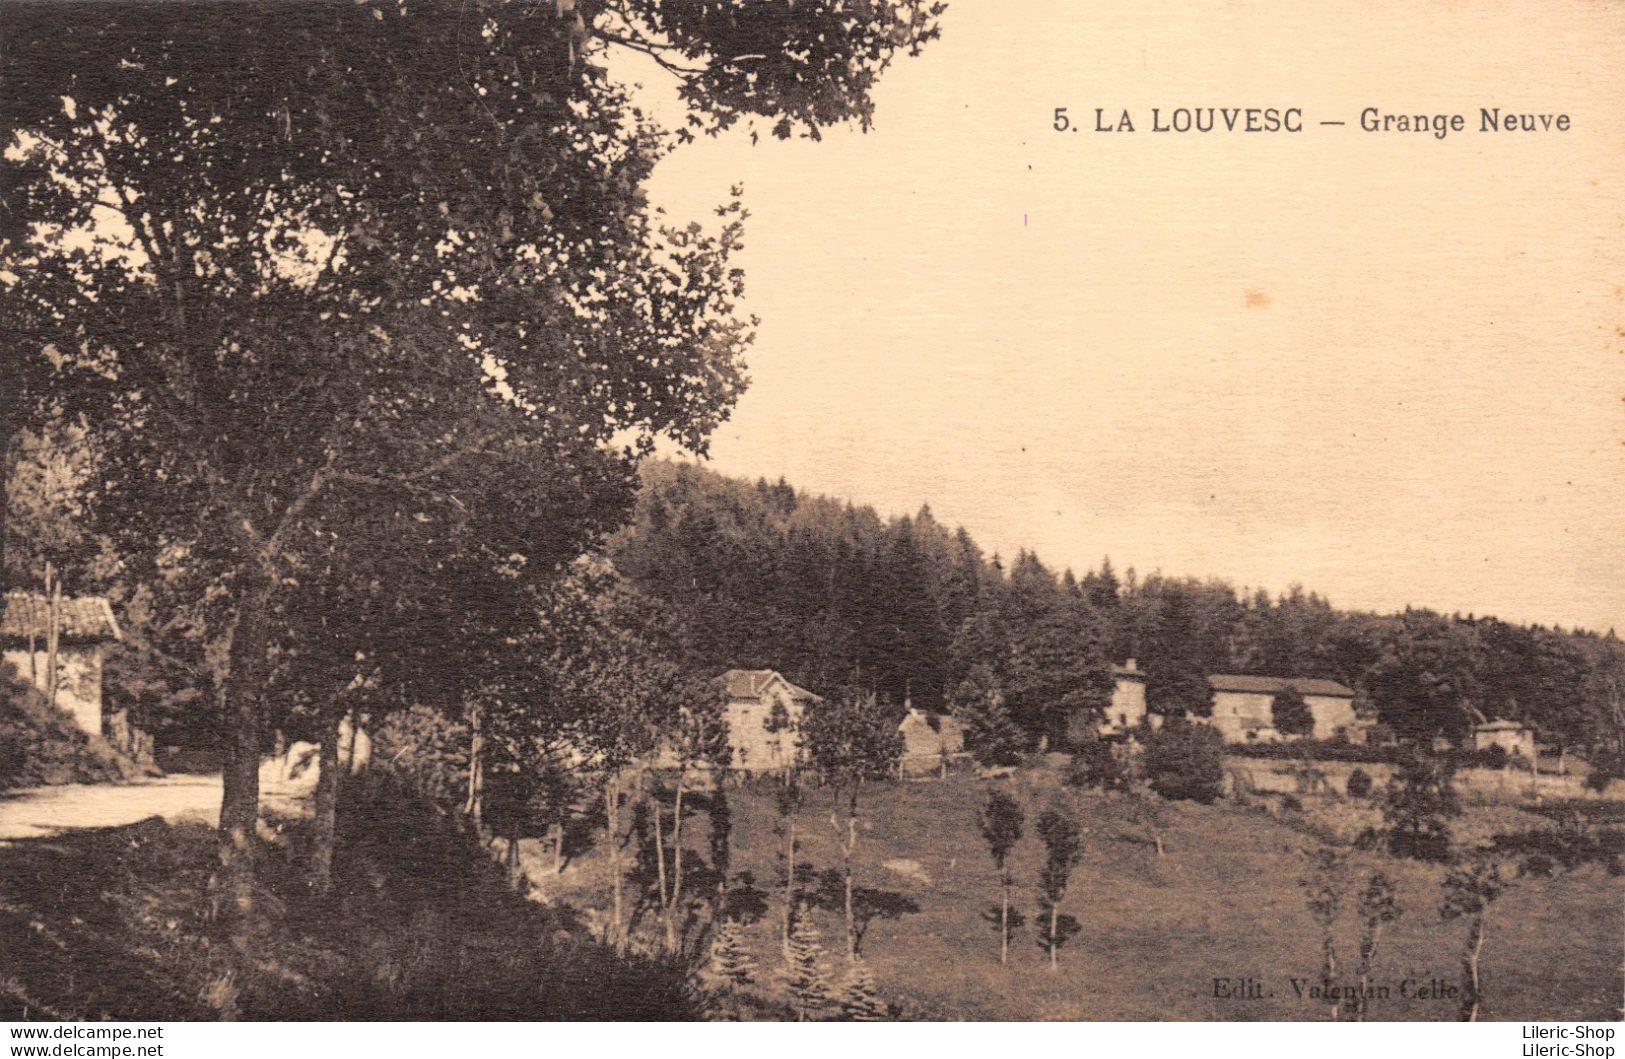 [07]  La Louvesc - Grange Neuve - Edition Valentin CELLE - Cpa ± 1920 ♥♥♥ - La Louvesc